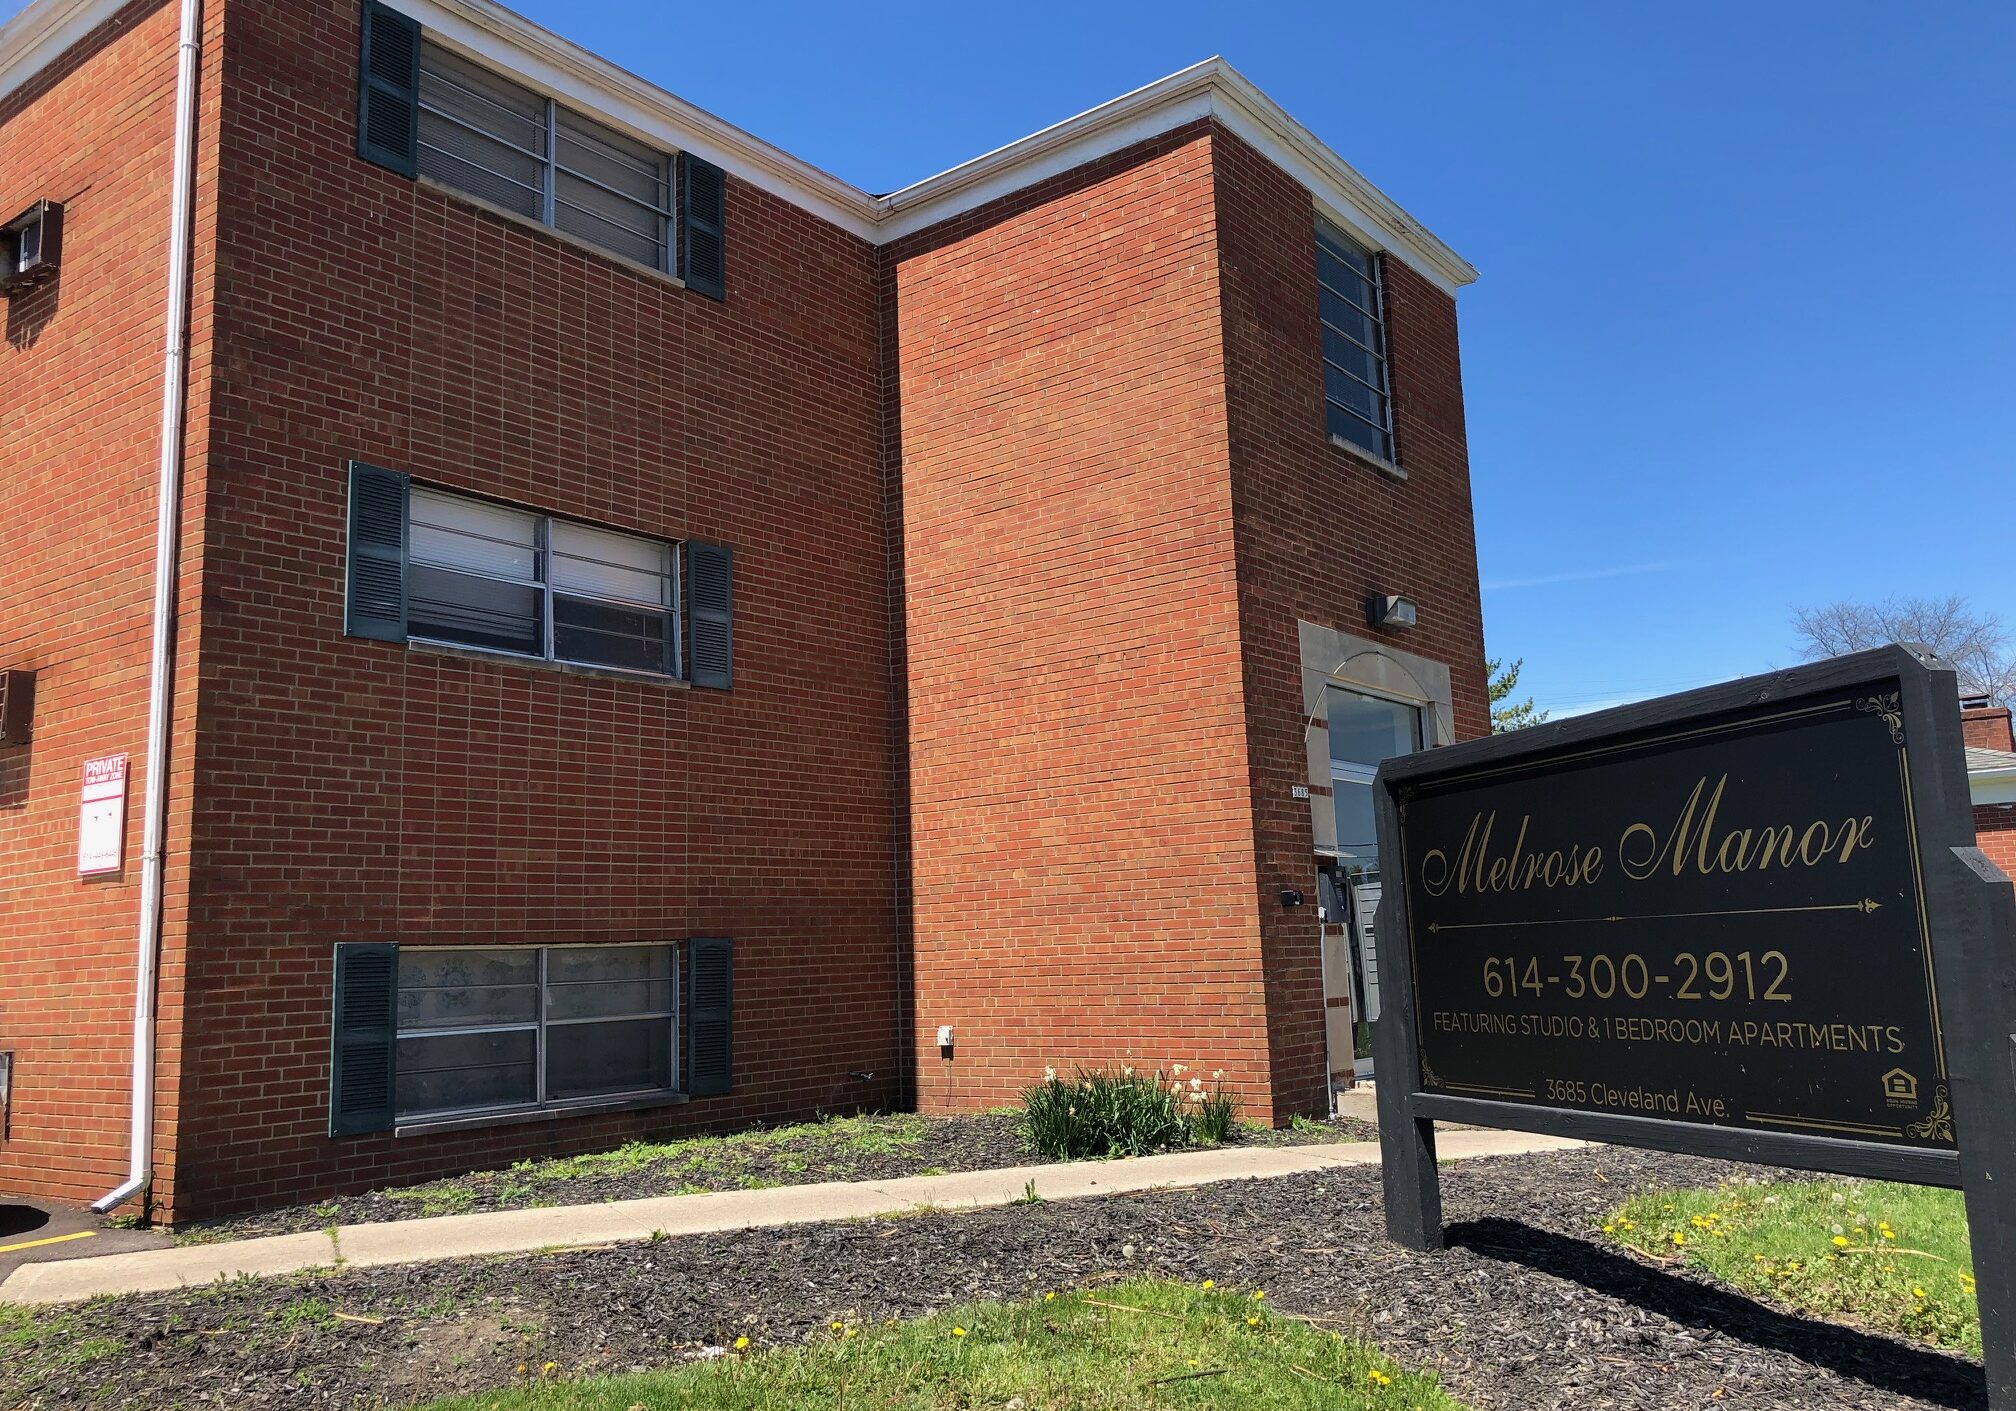 Melrose Manor Workforce Housing Investment Property Columbus, Ohio